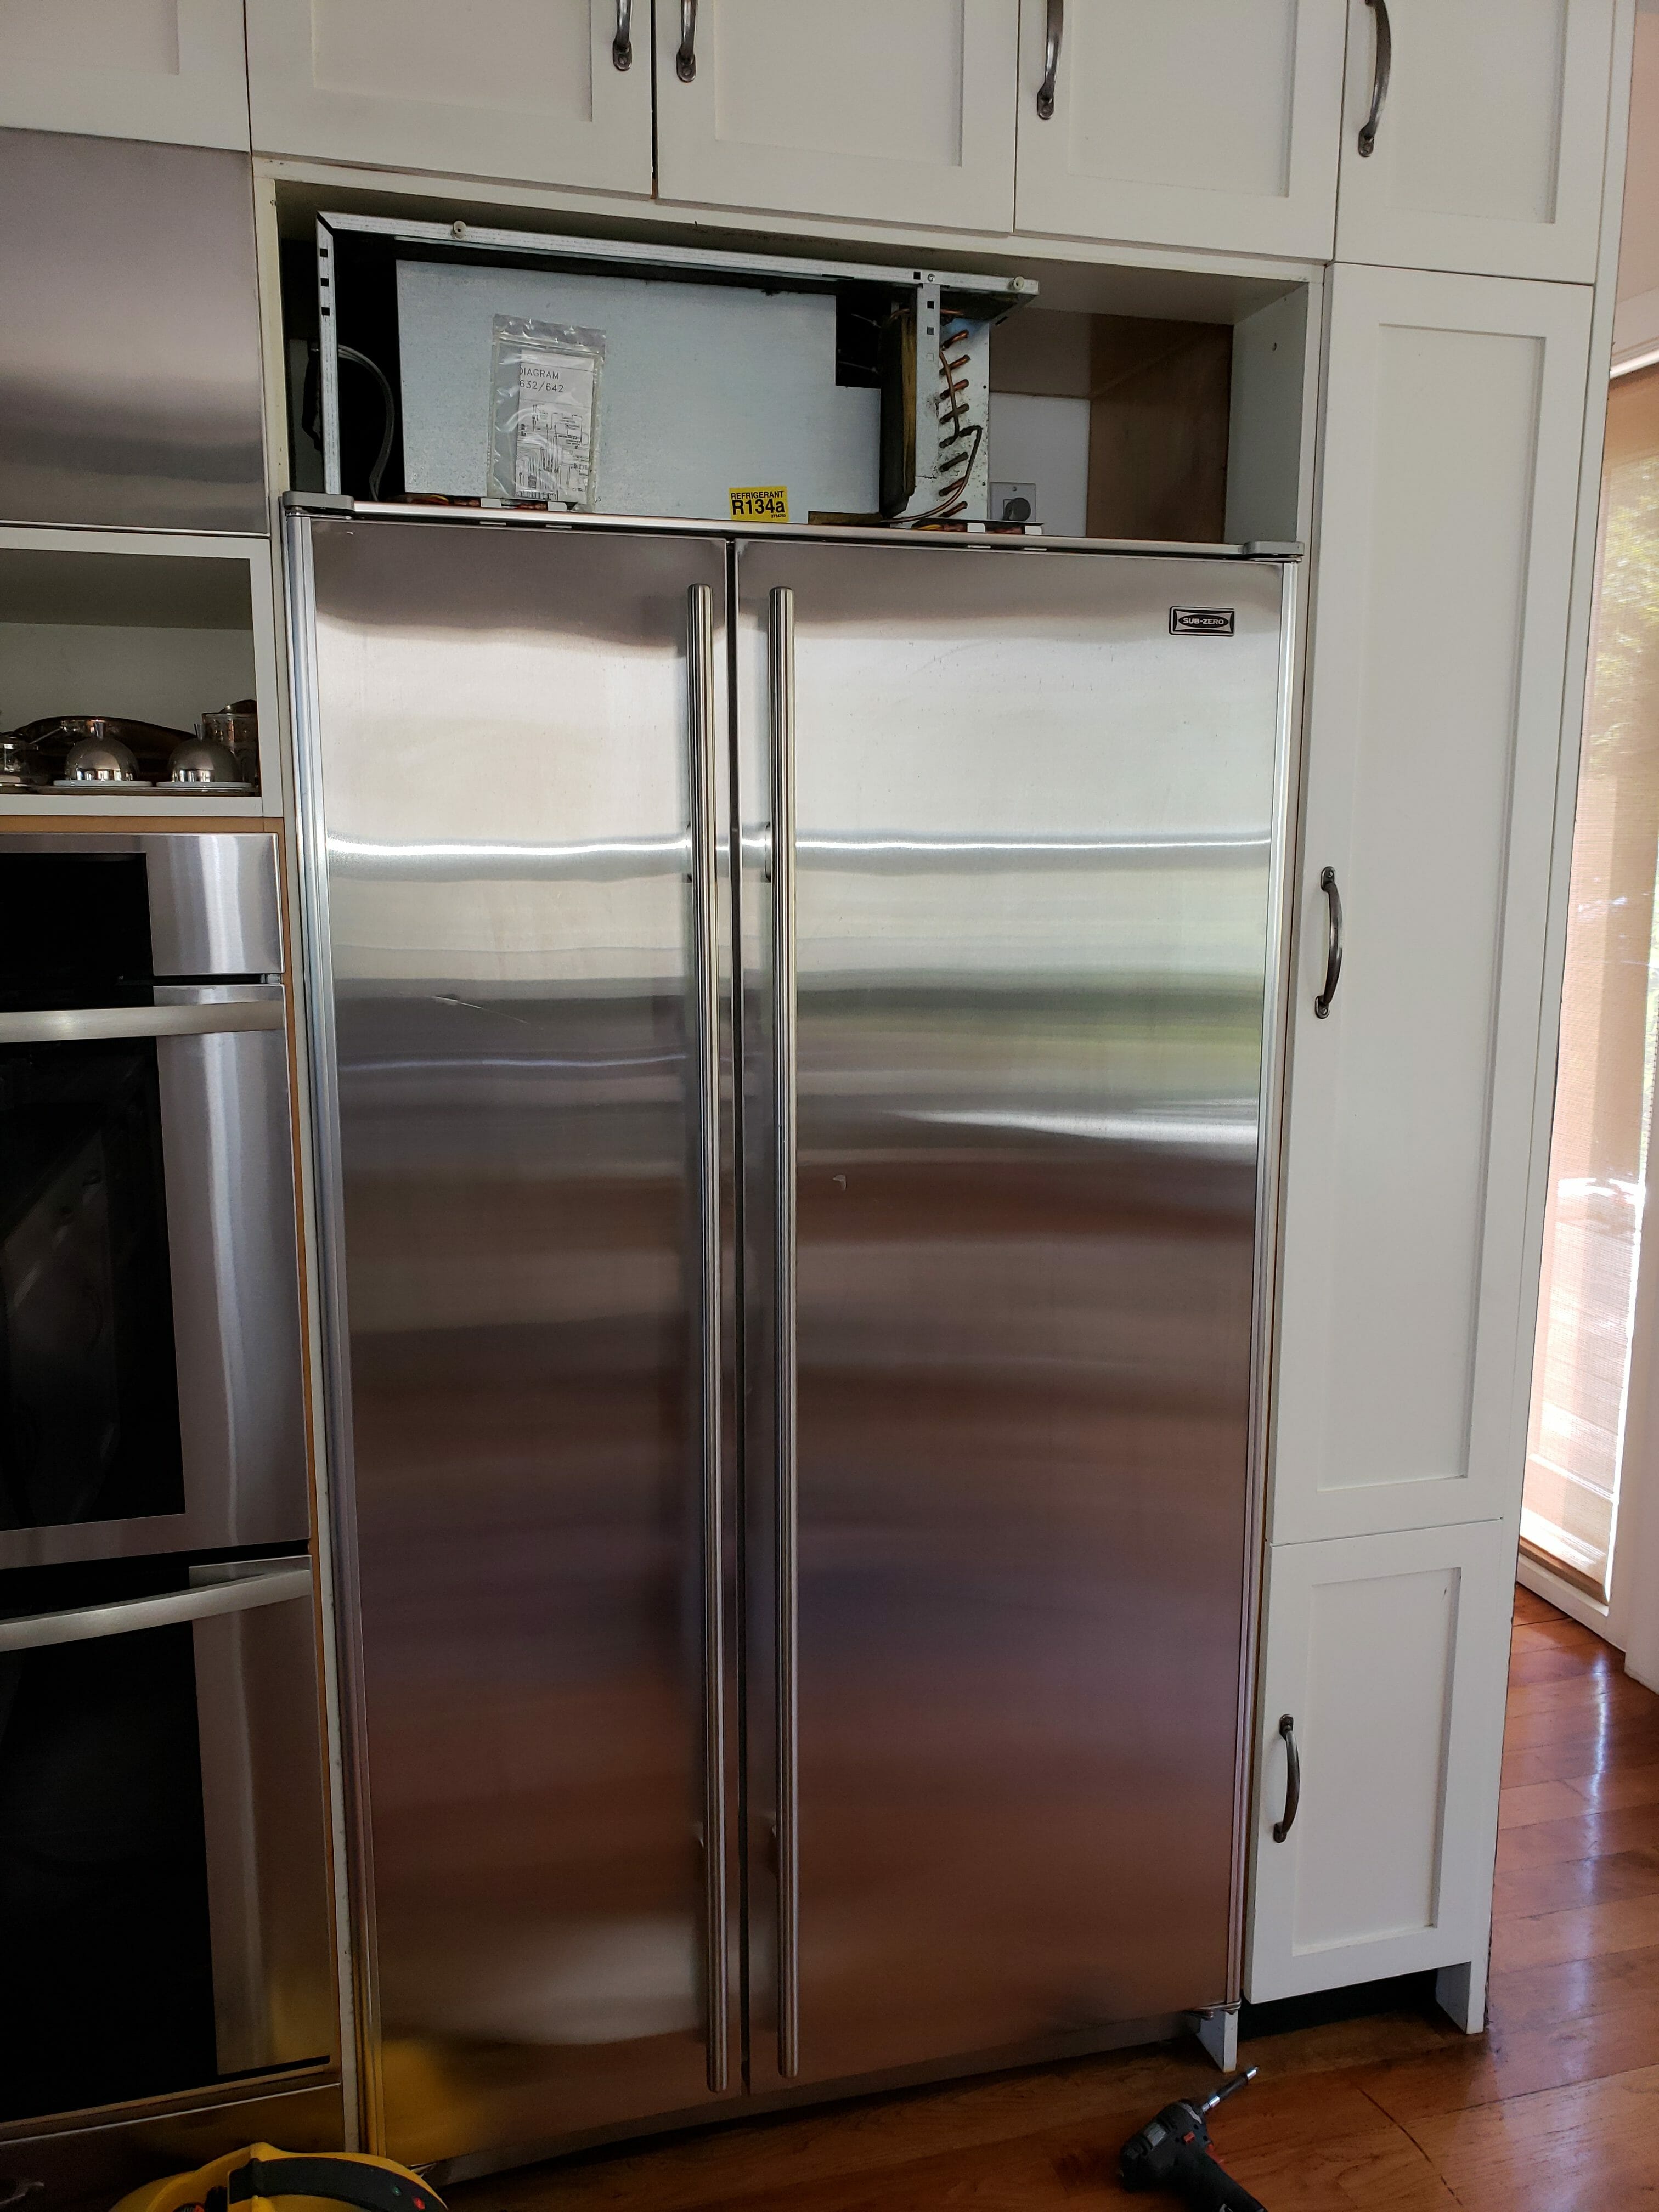 Sub Zero 642 refrigerator is leaking, Repair - San Francisco, CA - KIT